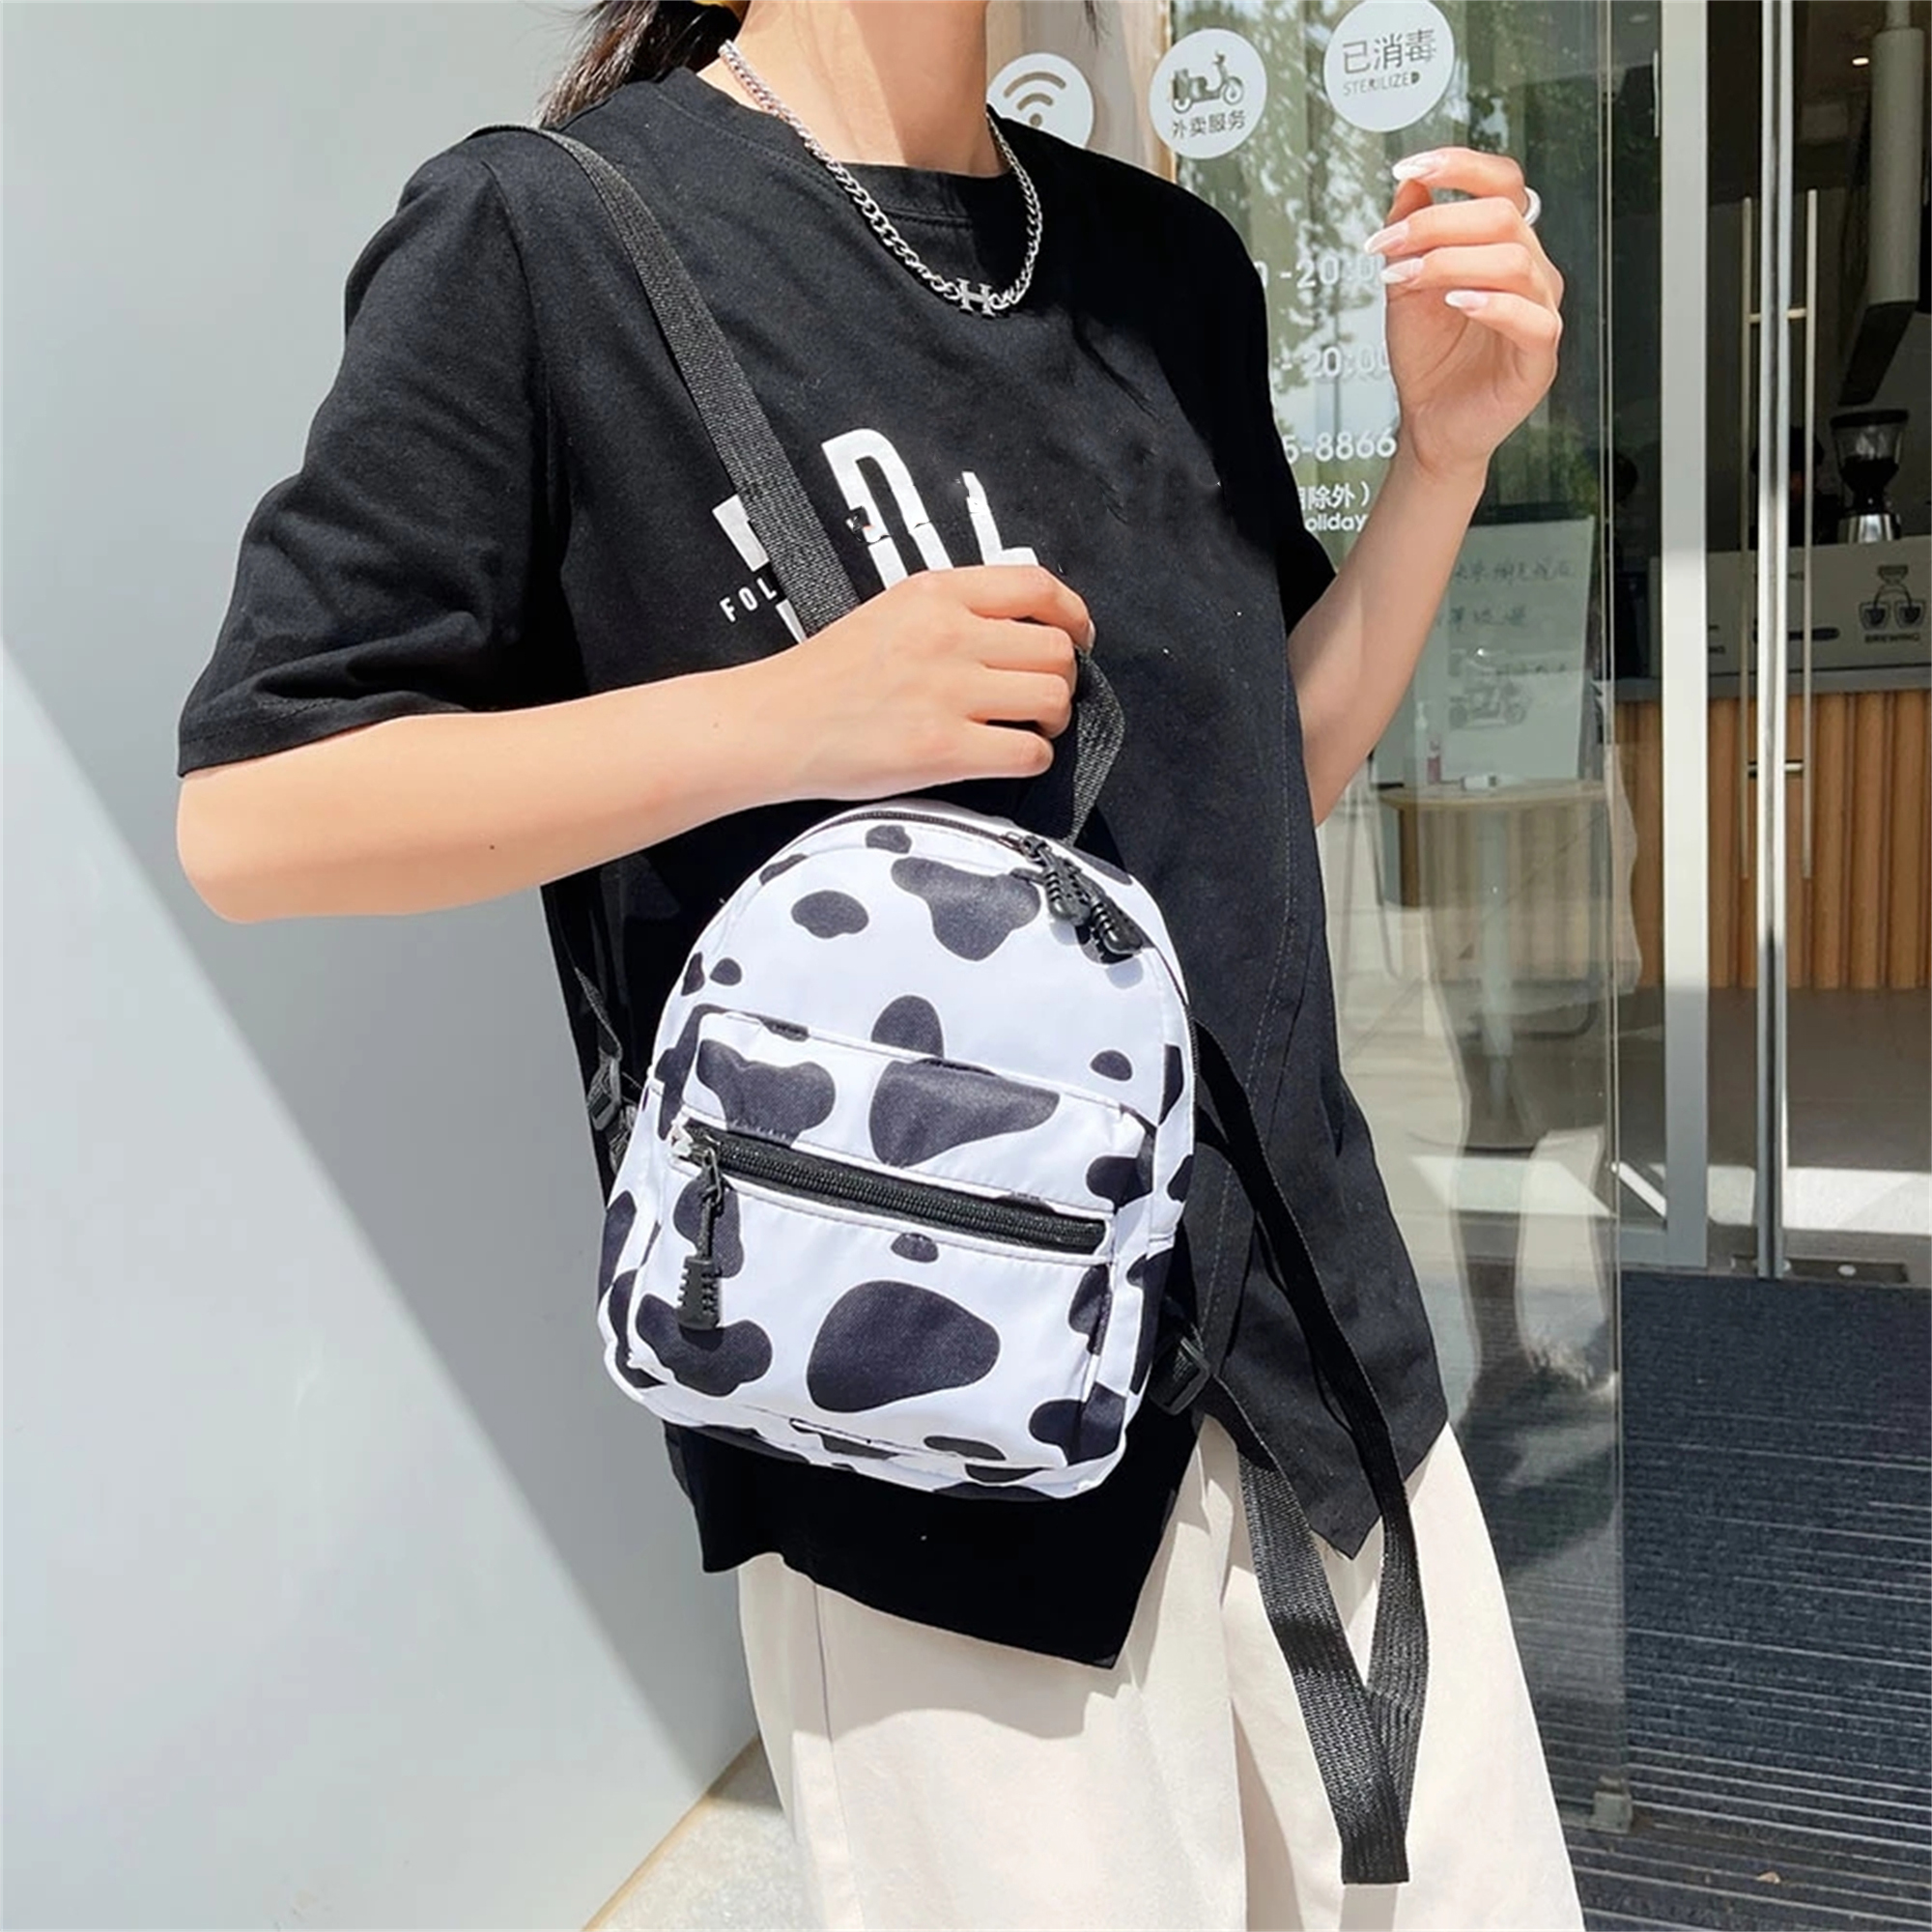 SHEIN, Bags, Shein Mini Backpack In Black White Butterfly Print